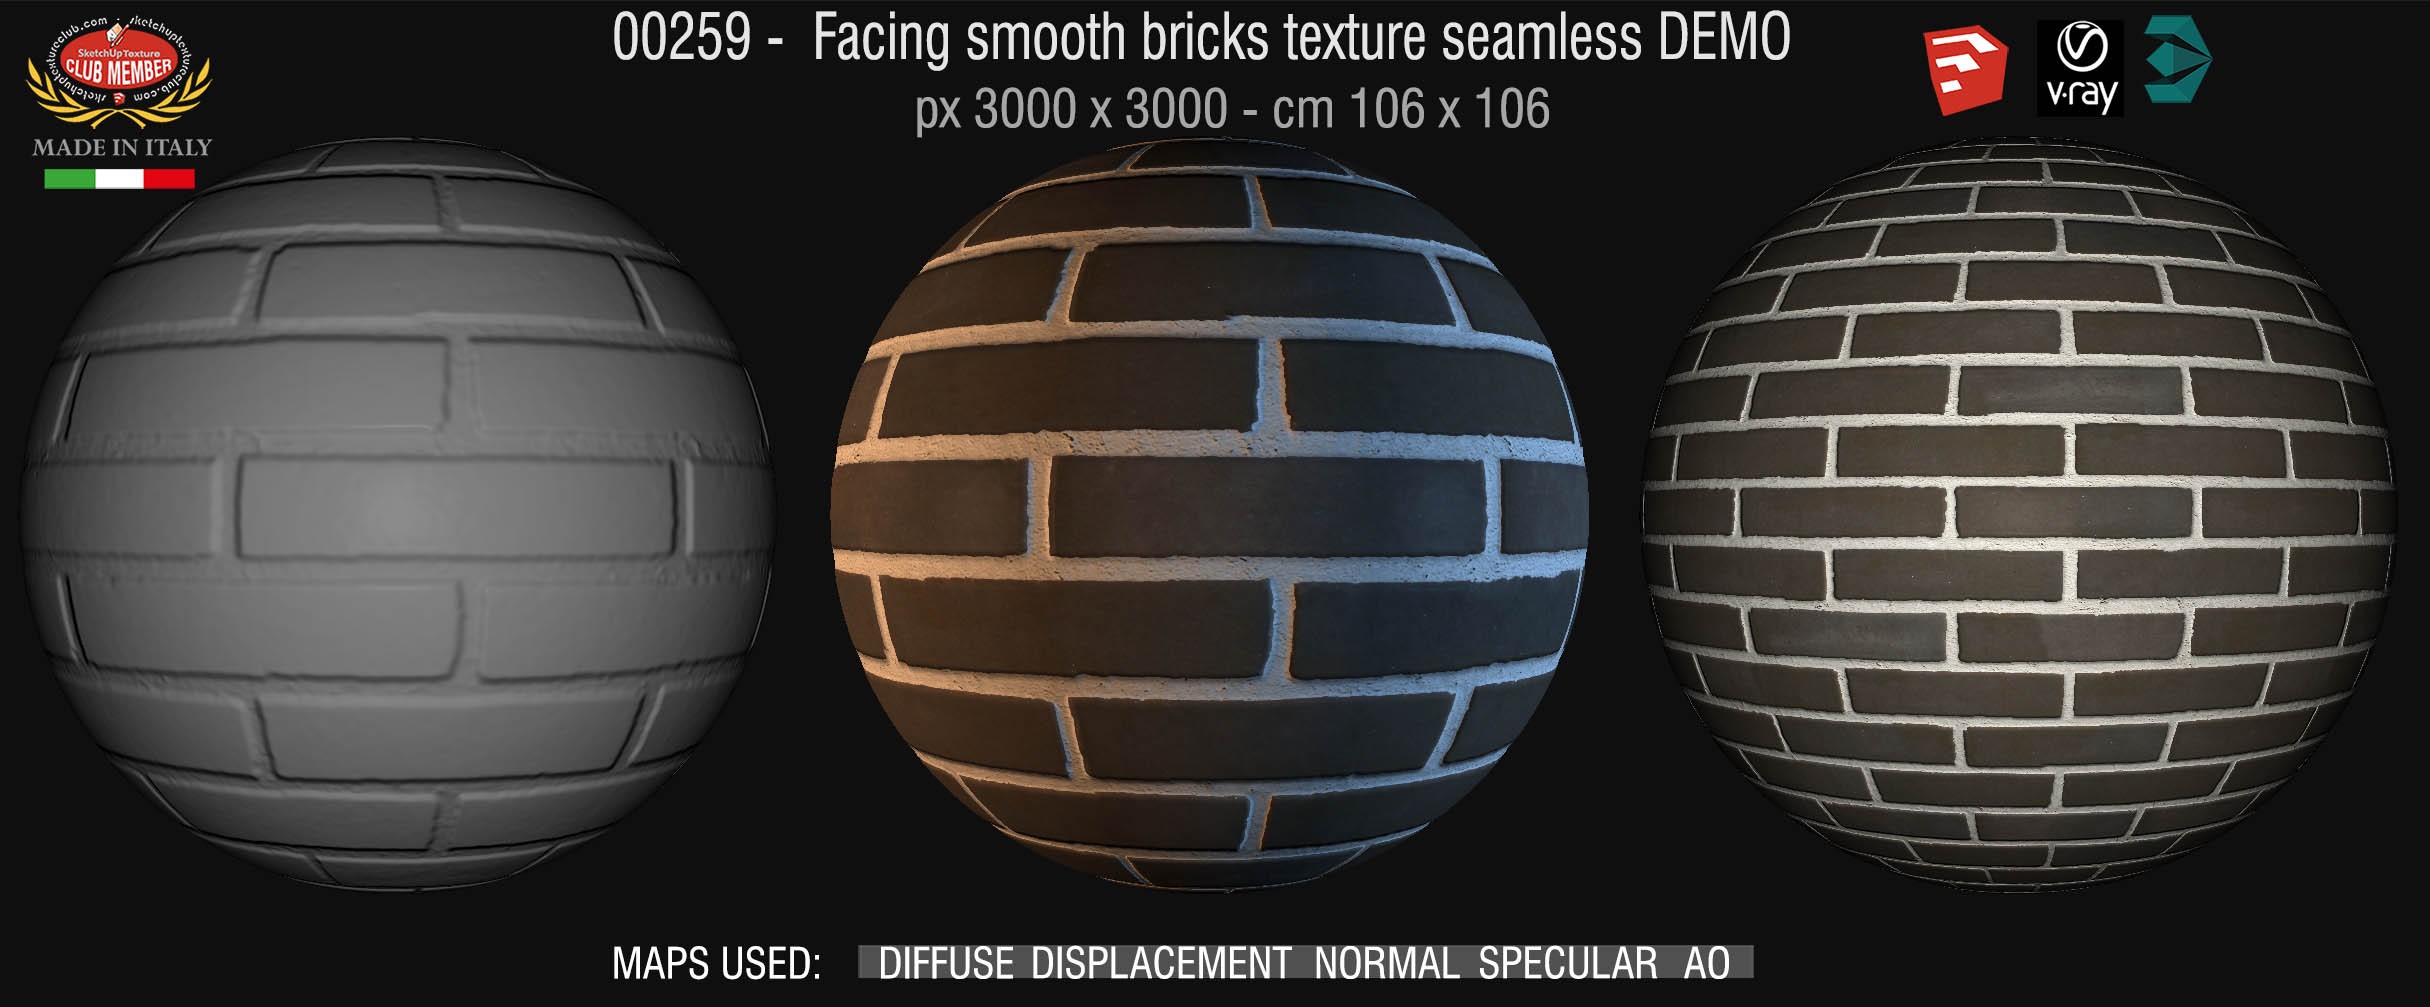 00259 Facing smooth bricks texture seamless + maps DEMO